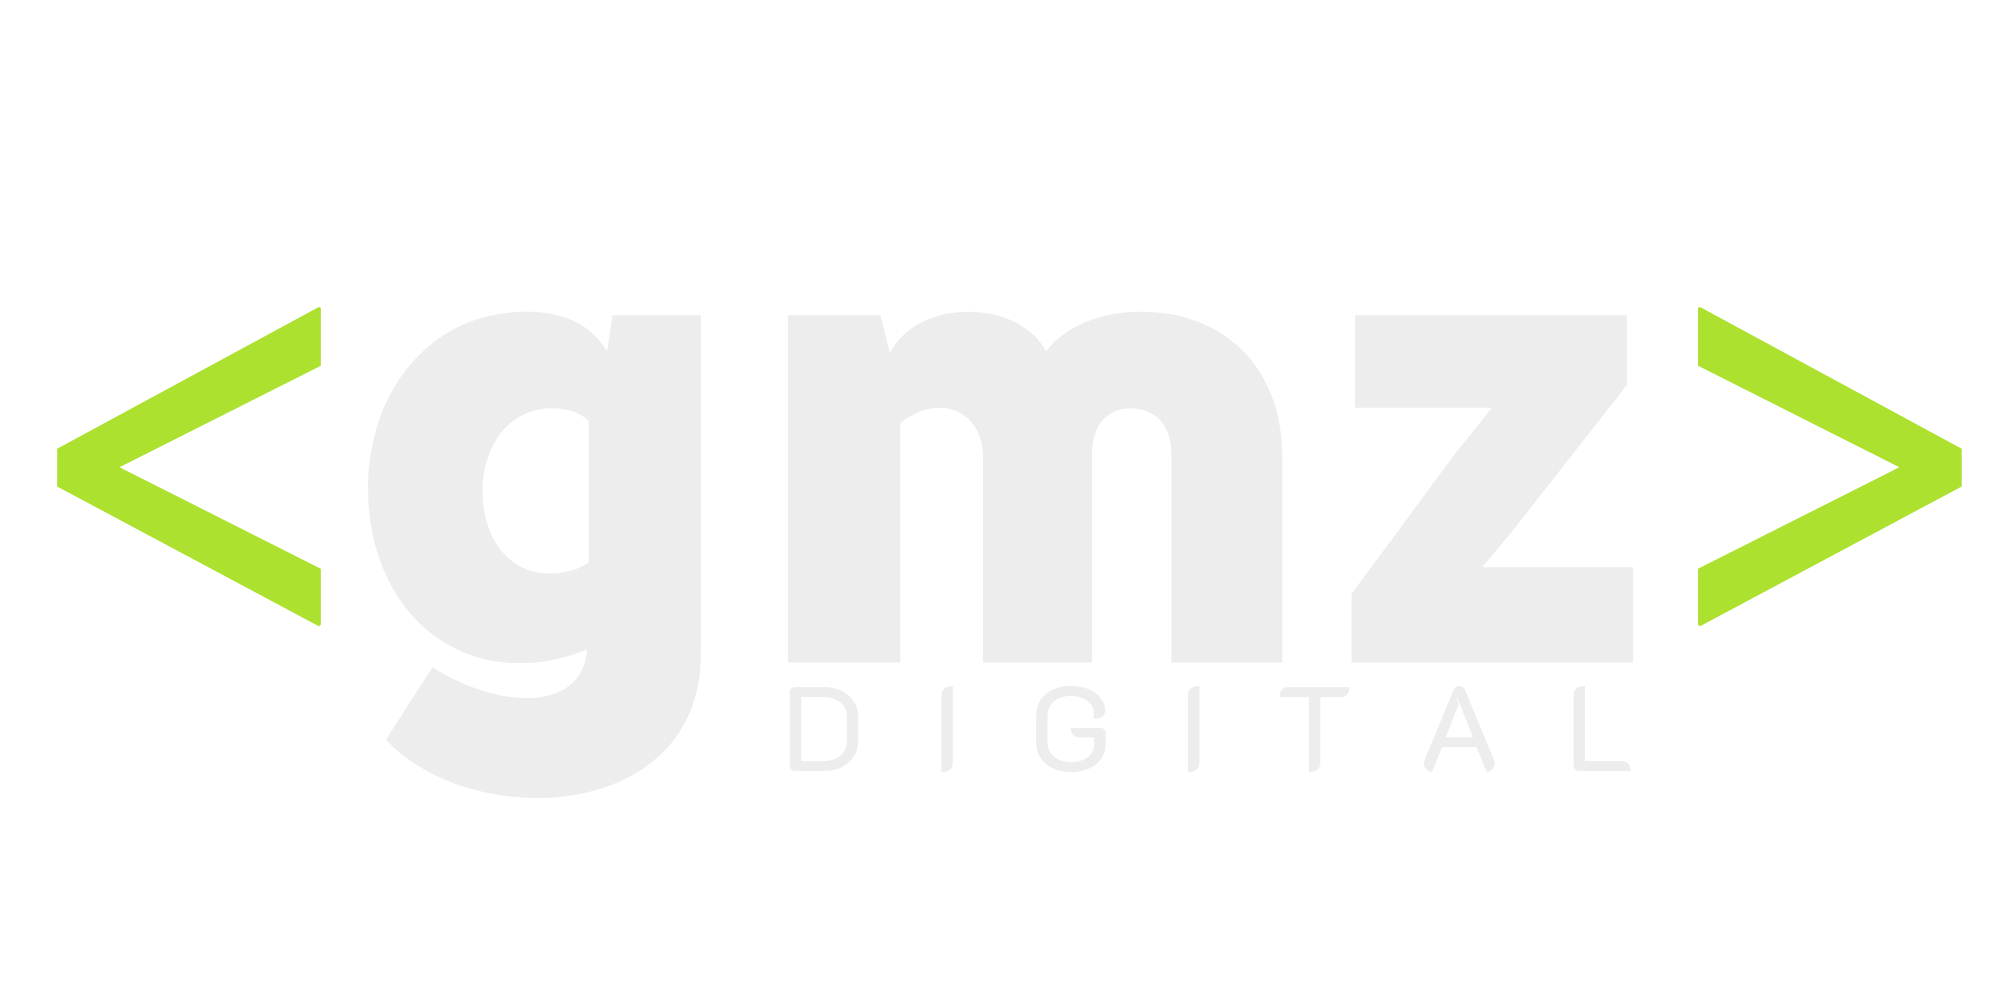 gmz-digital-logo-white-green